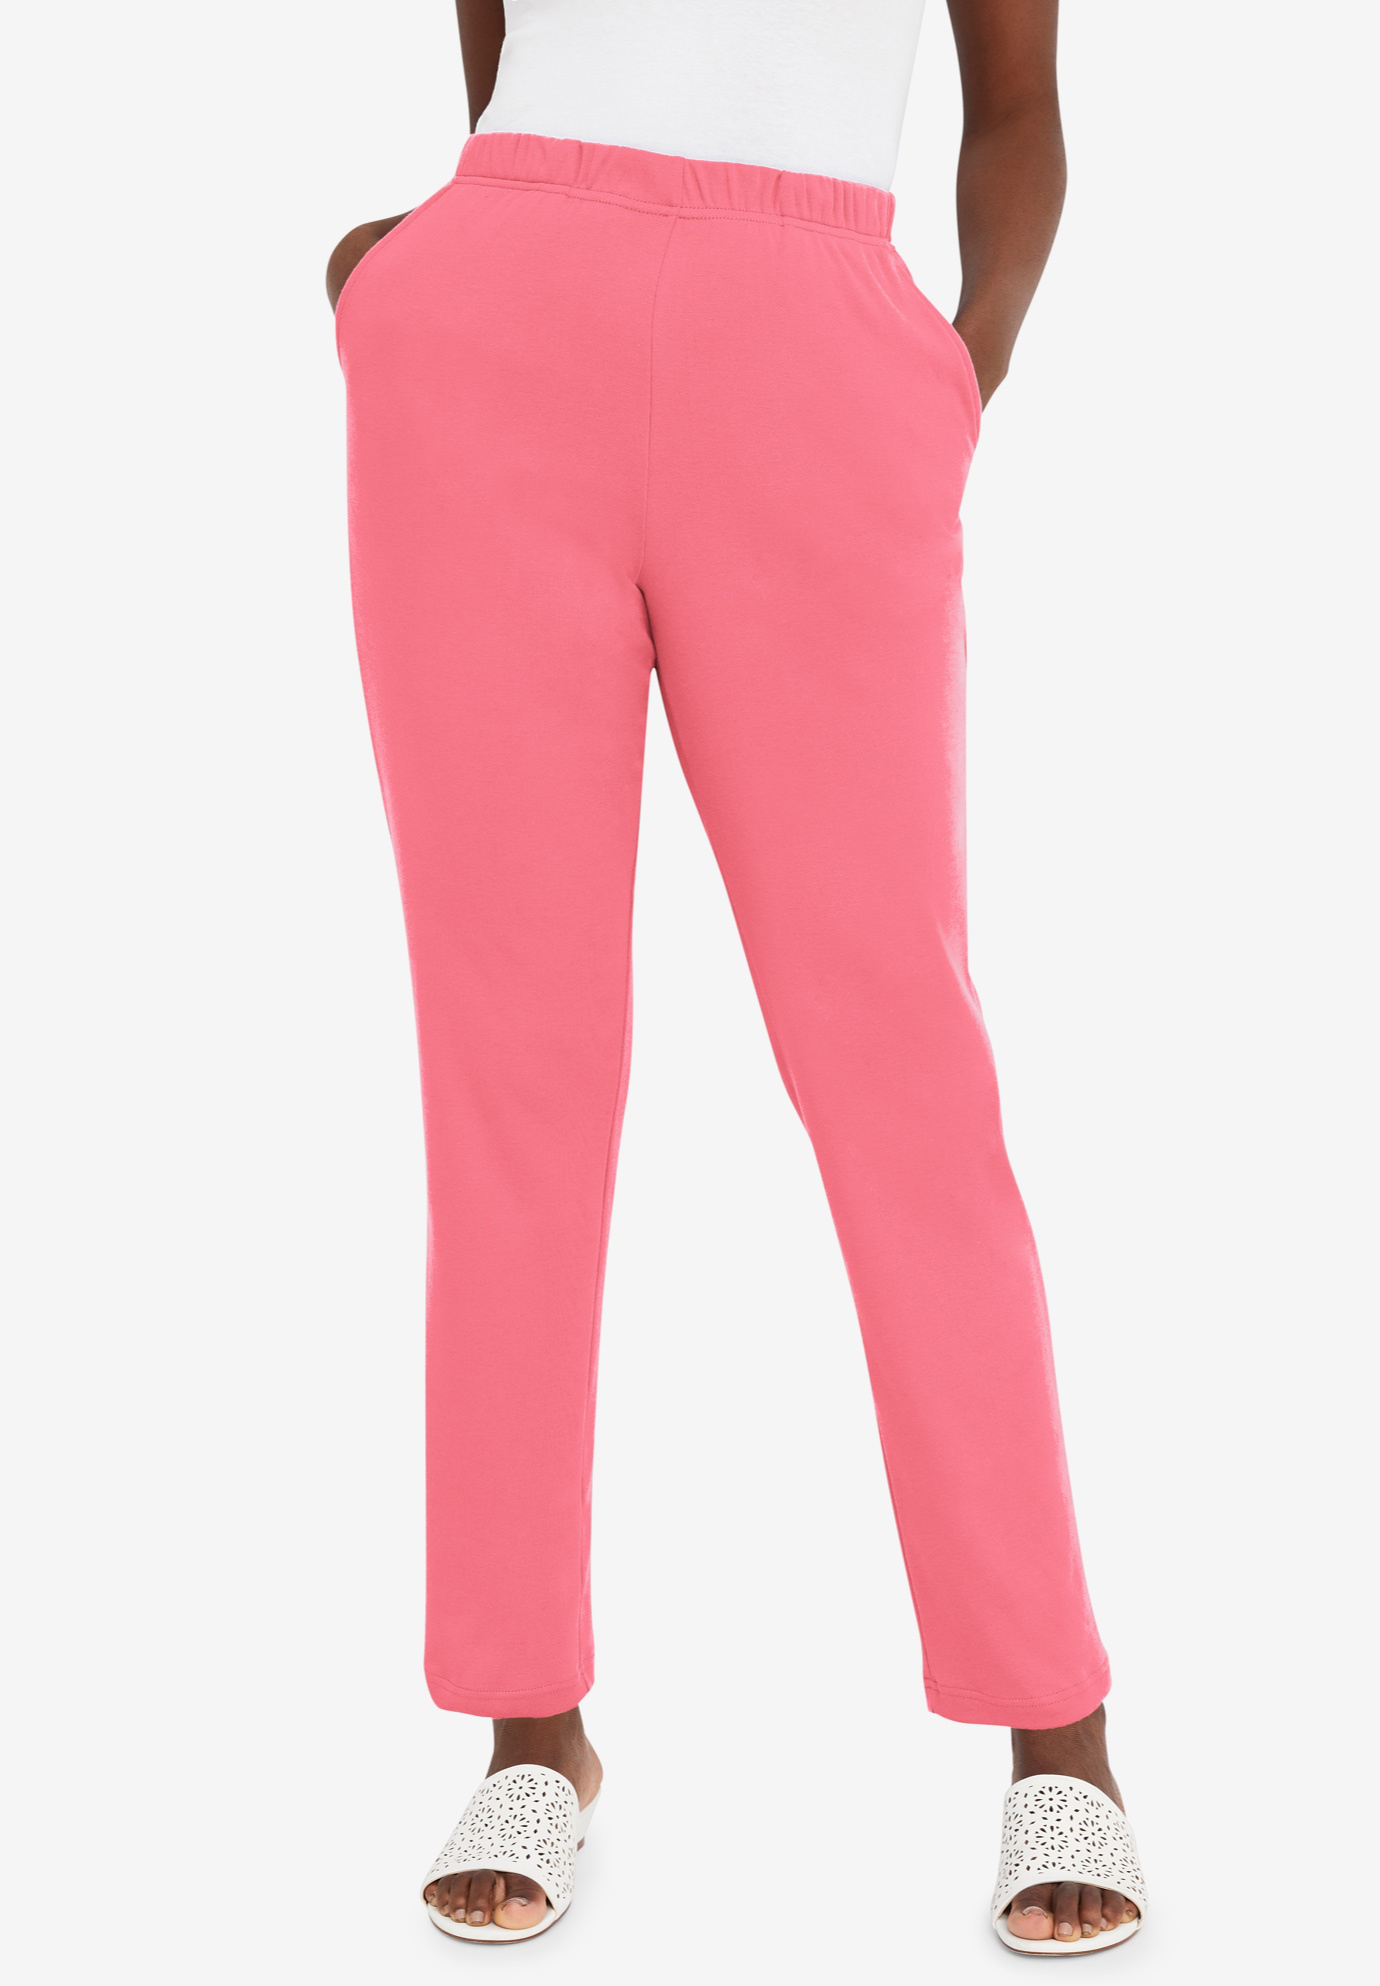 Jessica London Women's Plus Size Comfort Waist Capris - 18, Pink